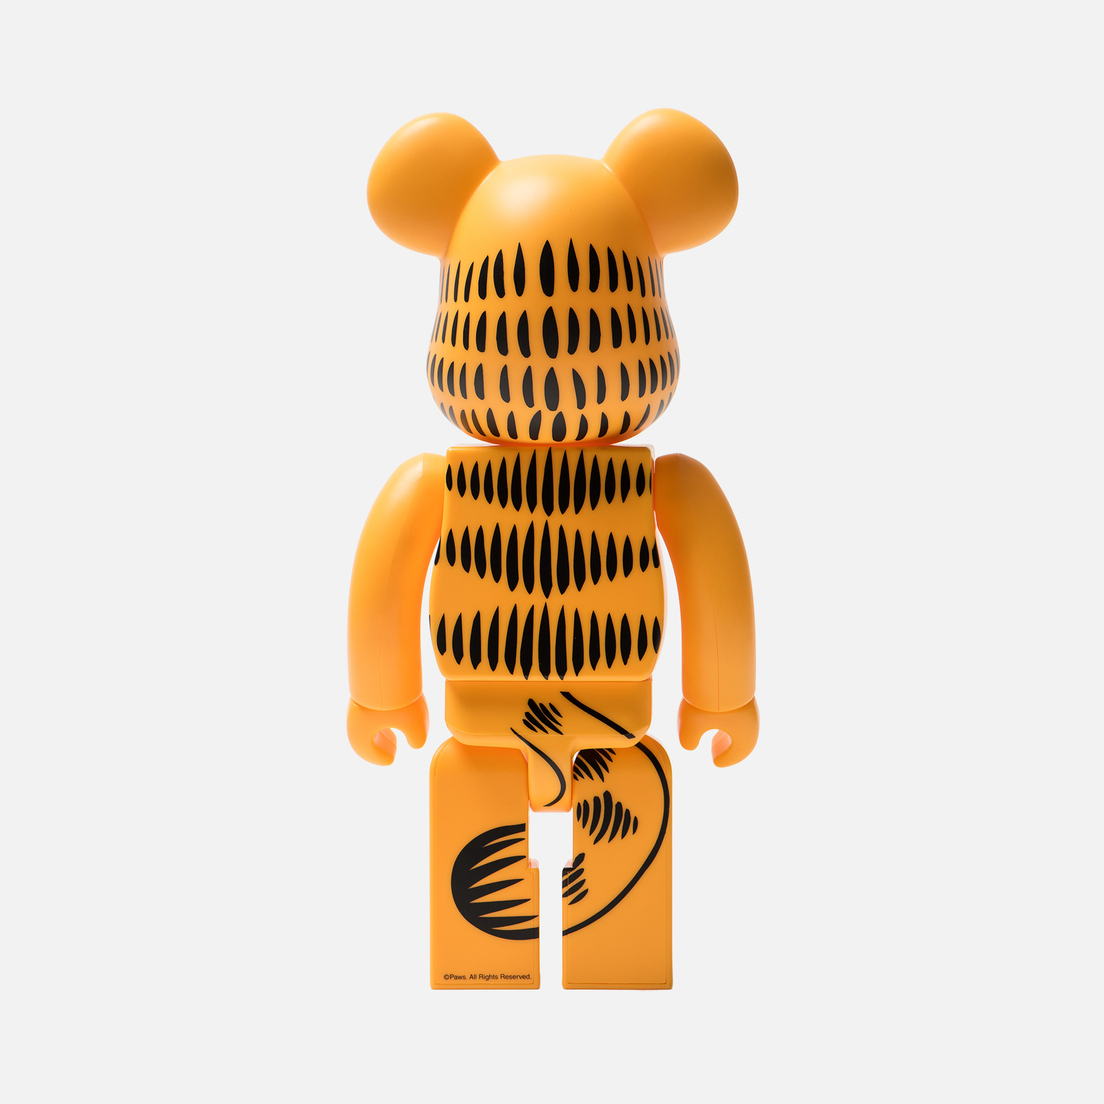 Medicom Toy Игрушка Bearbrick Garfield 400%